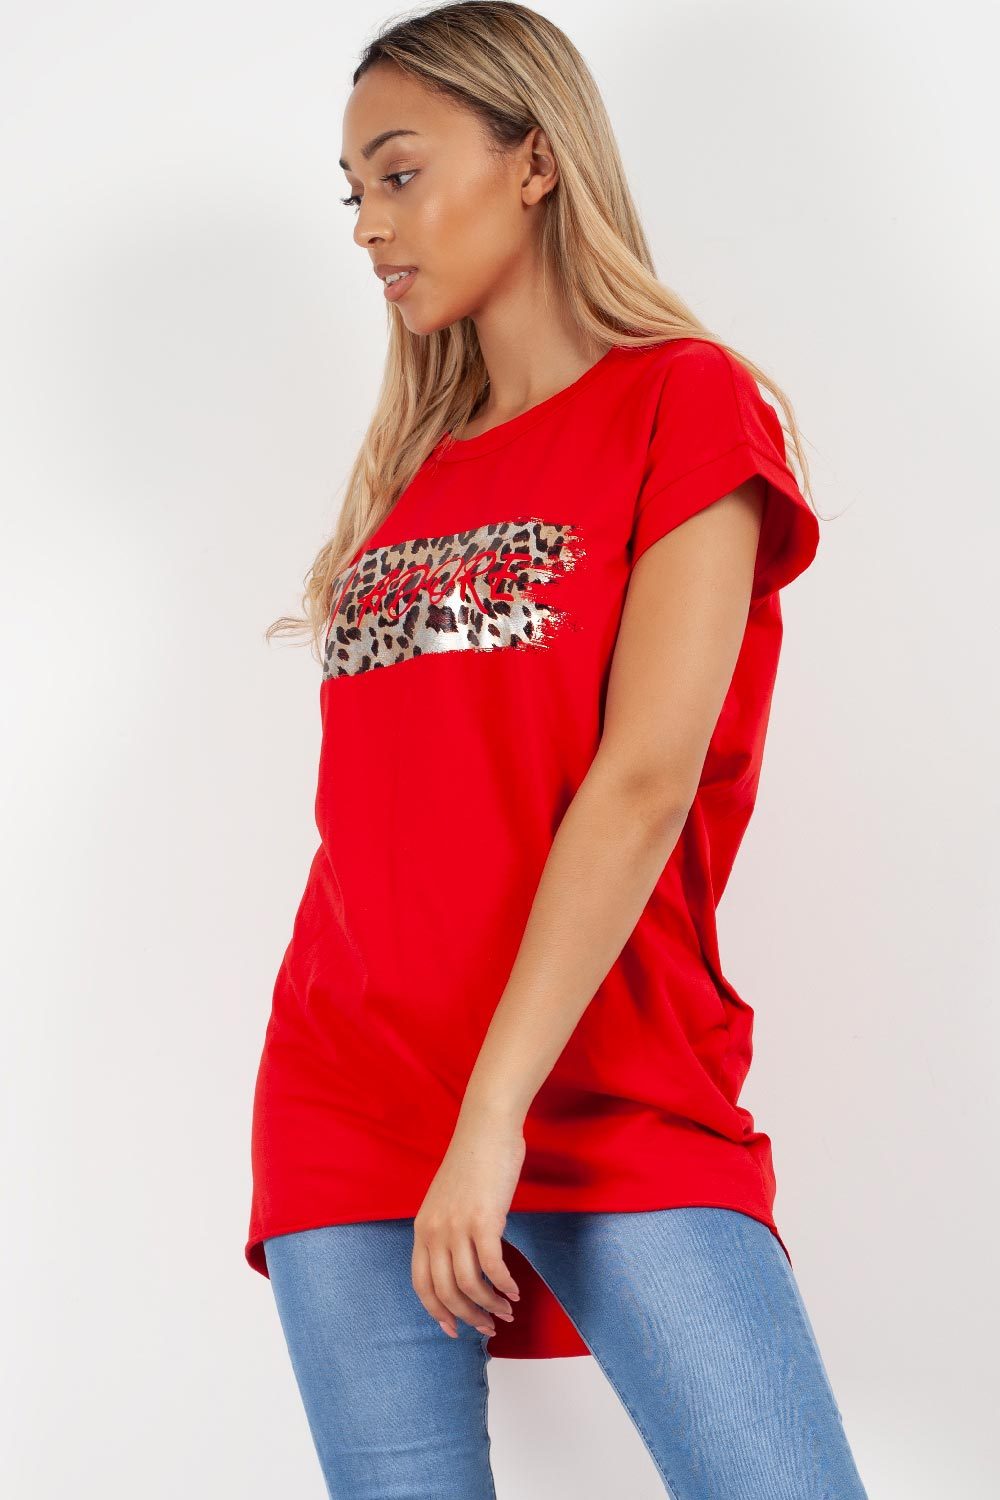 red oversized t shirt womens